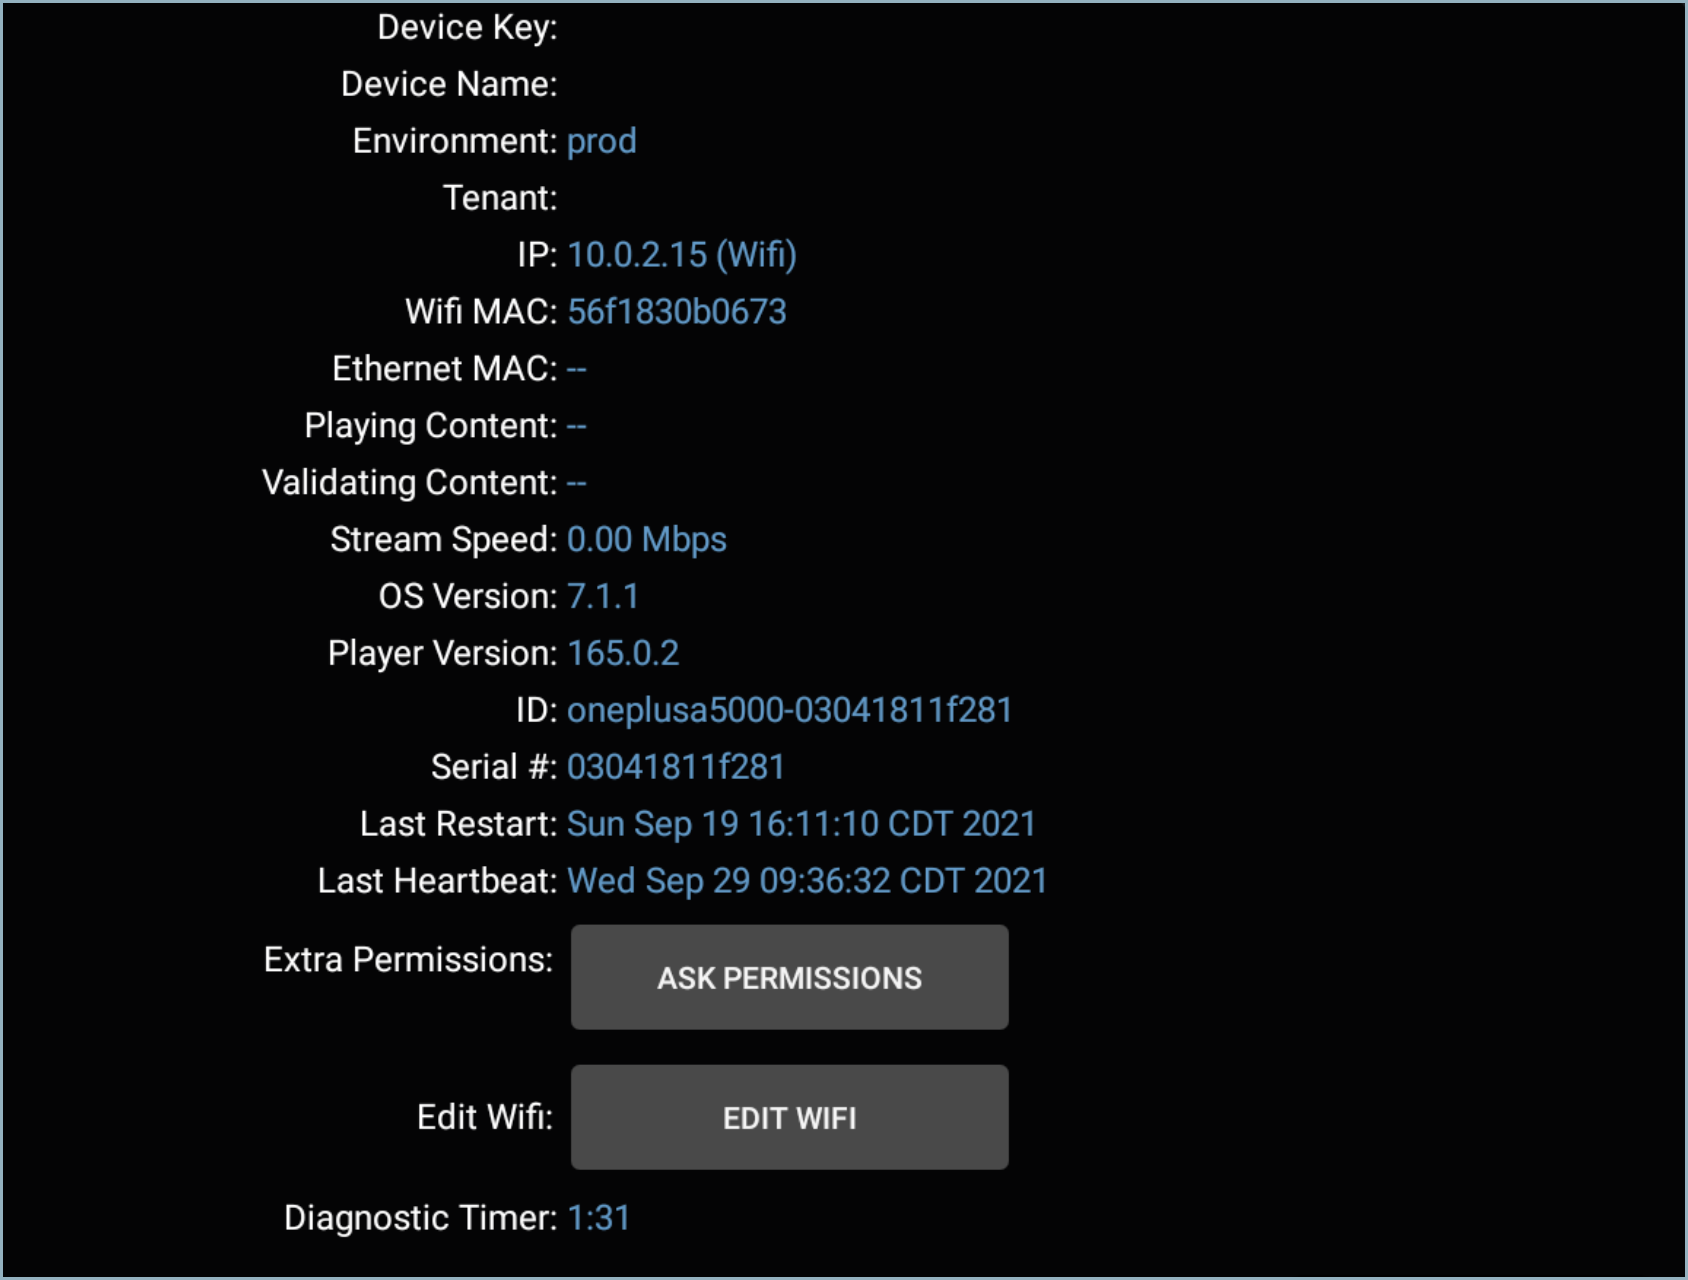 Diagnostics screen - Edit Wifi button showing